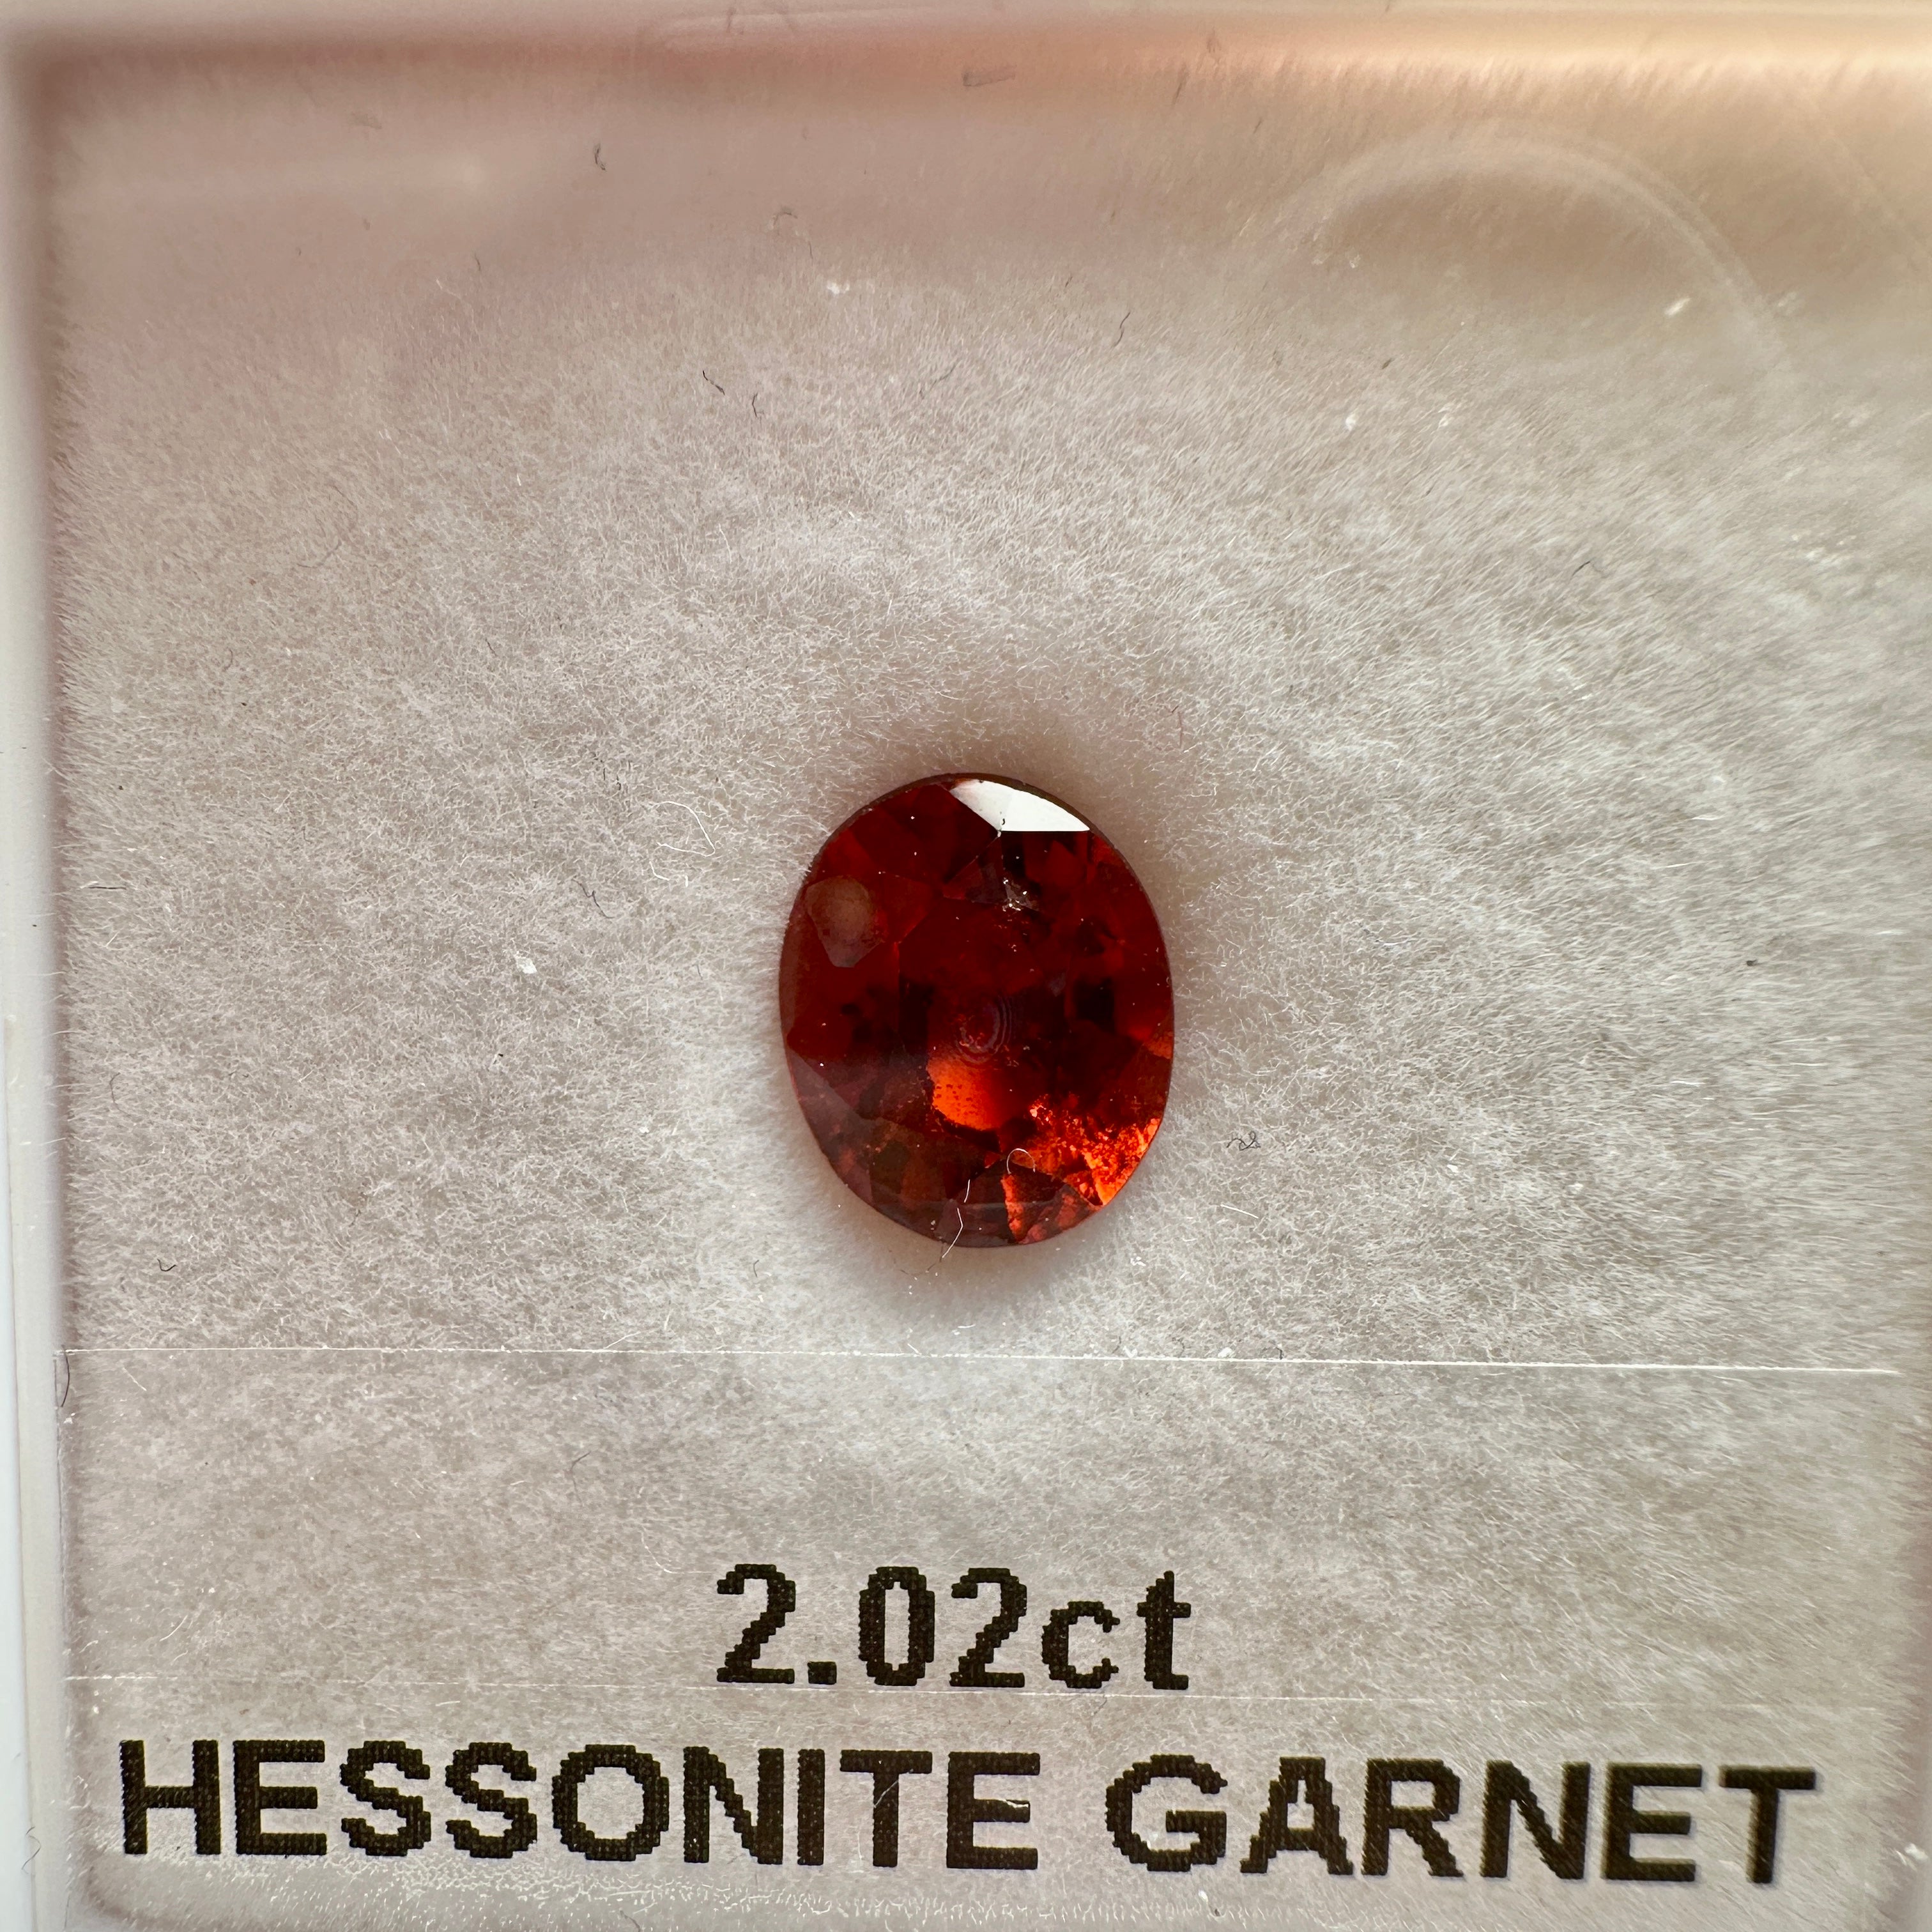 2.02ct Hessonite Garnet, Untreated Unheated, native cut